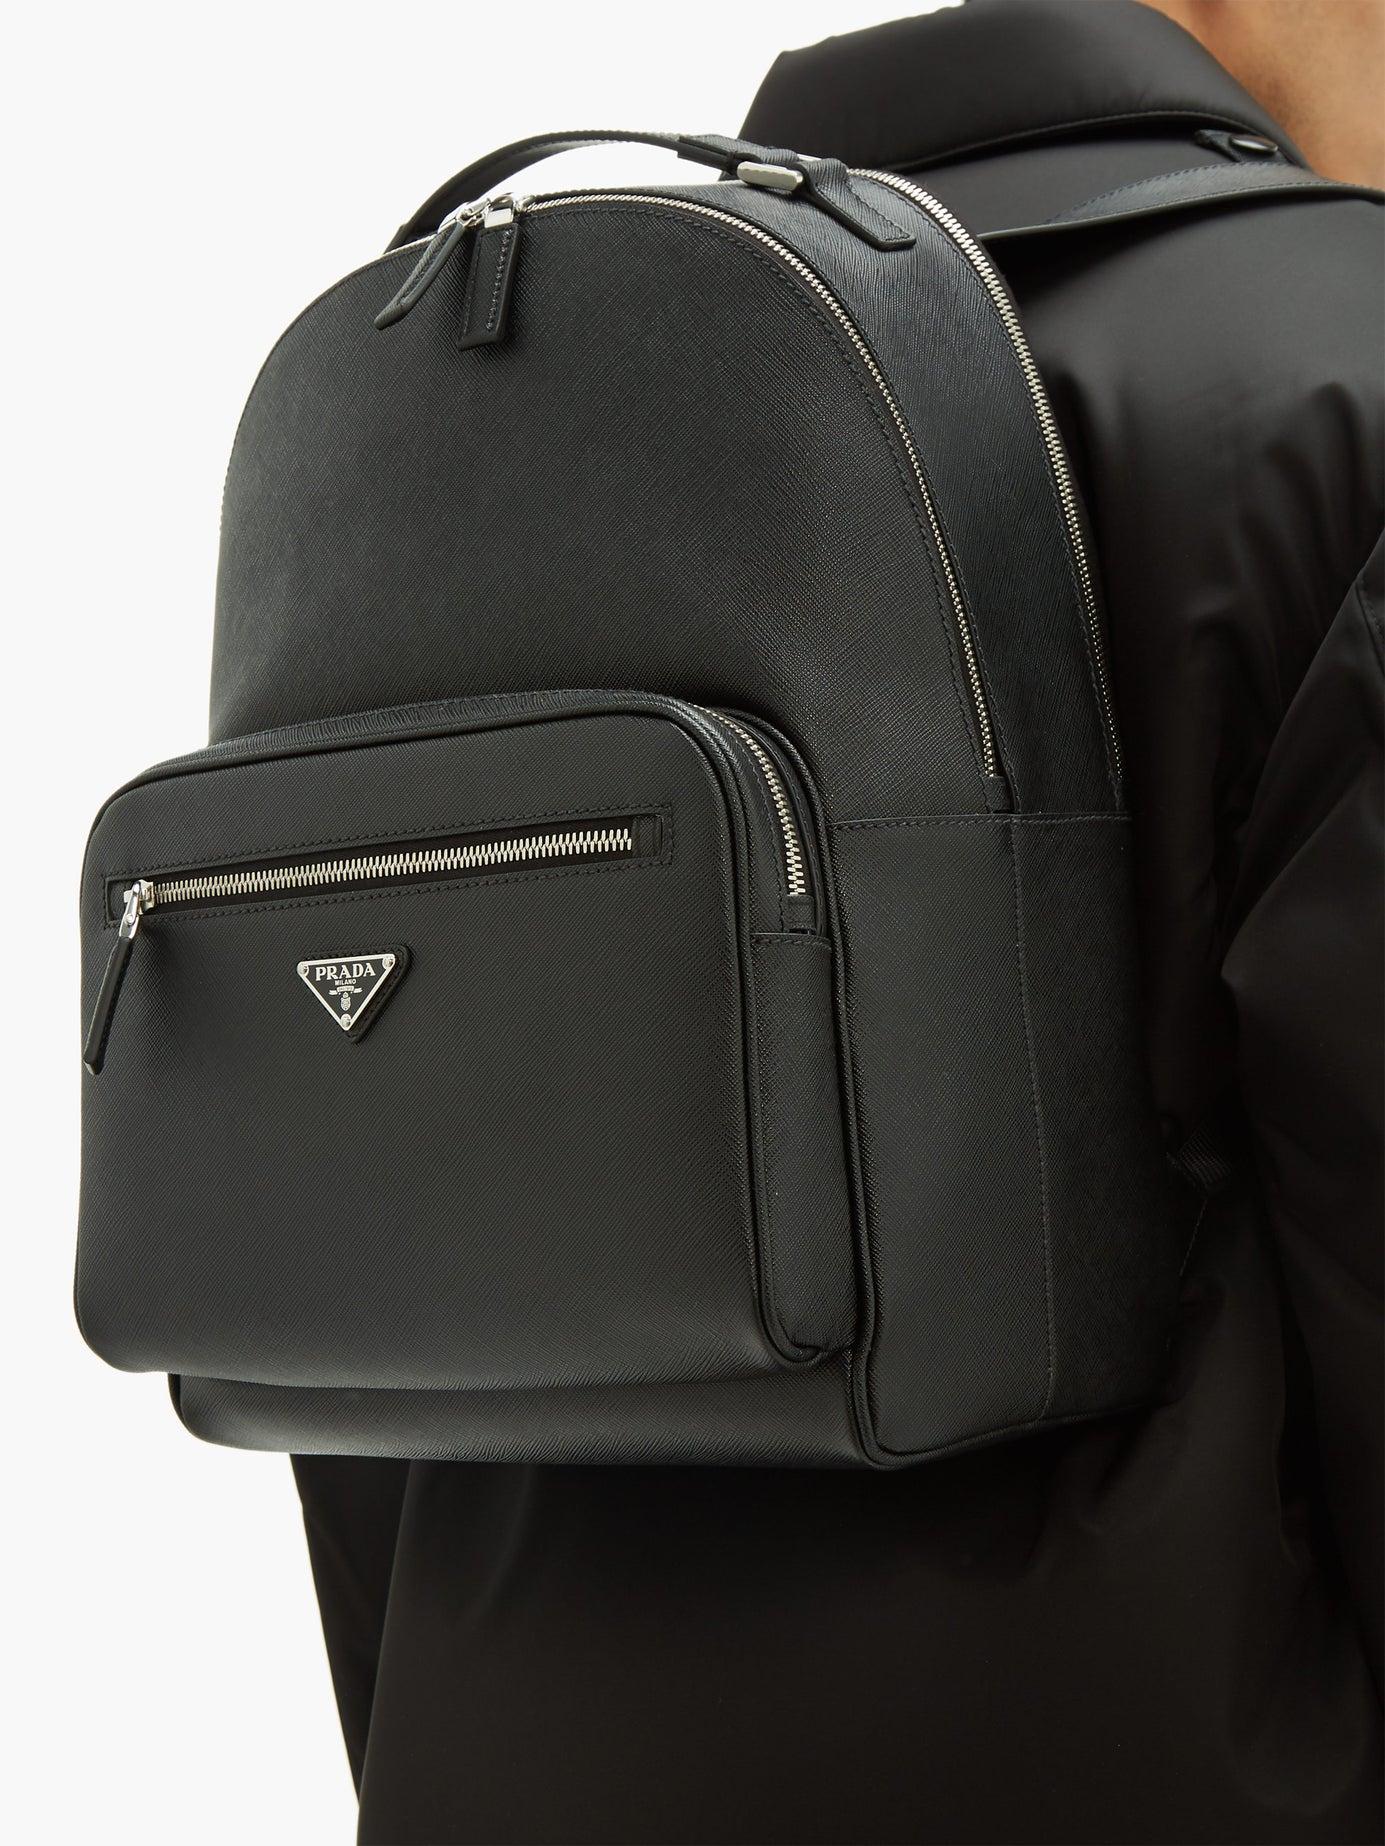 Prada Saffiano Leather Backpack in Nero (Black) for Men - Lyst